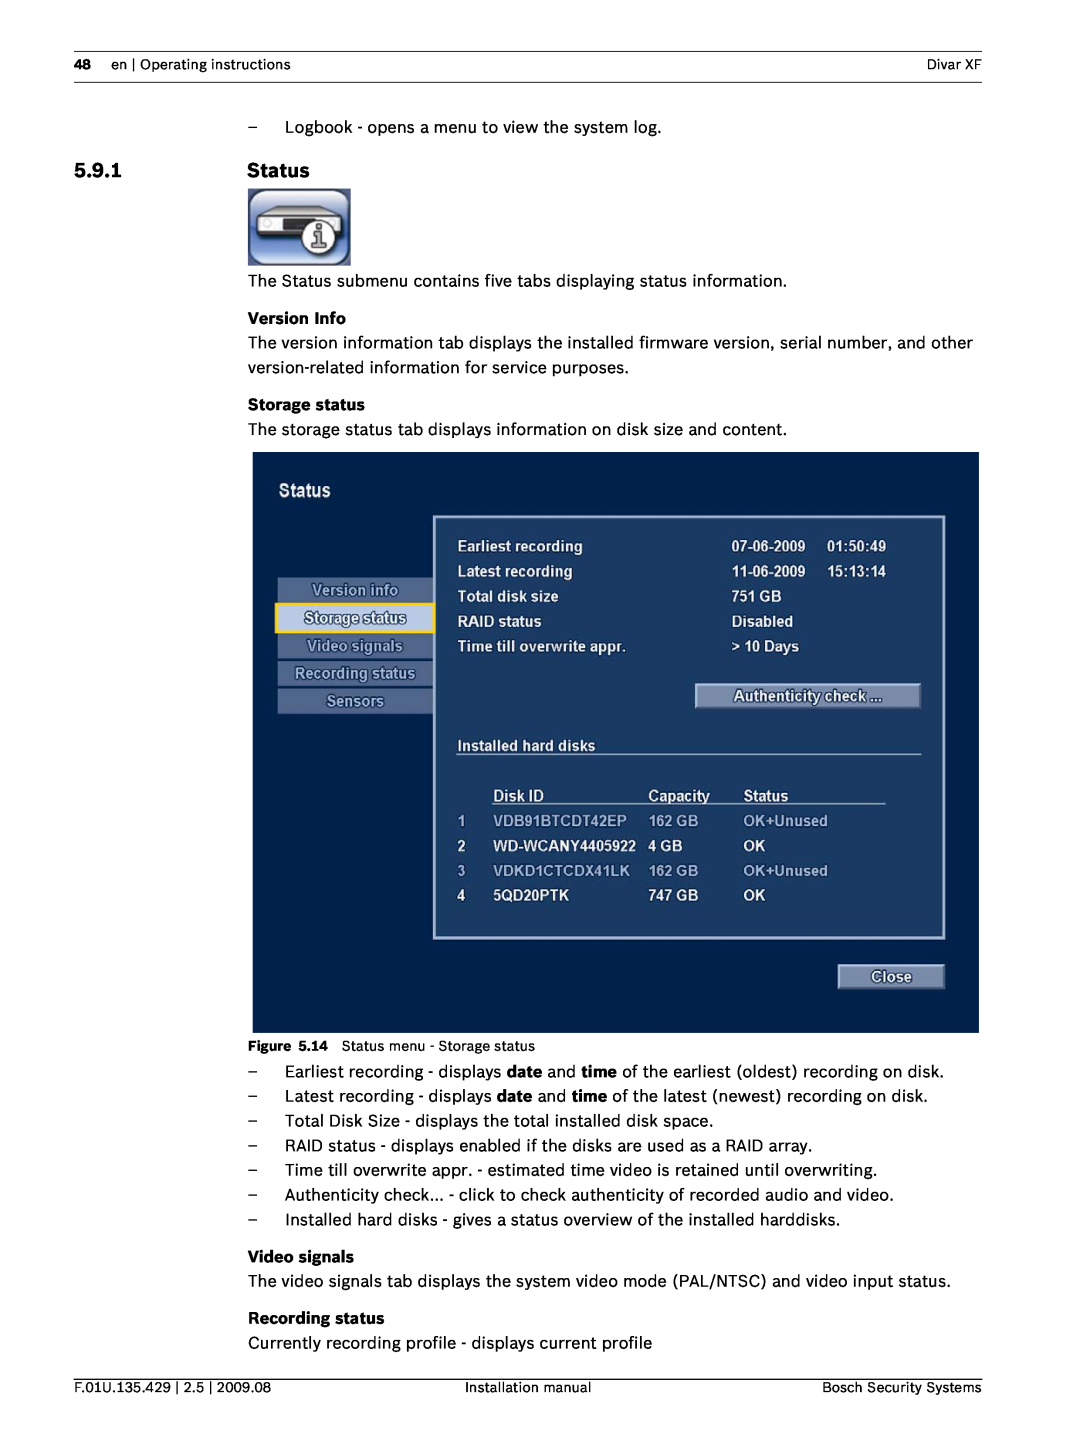 Bosch Appliances XF installation manual 5.9.1Status, Version Info, Storage status, Video signals, Recording status 